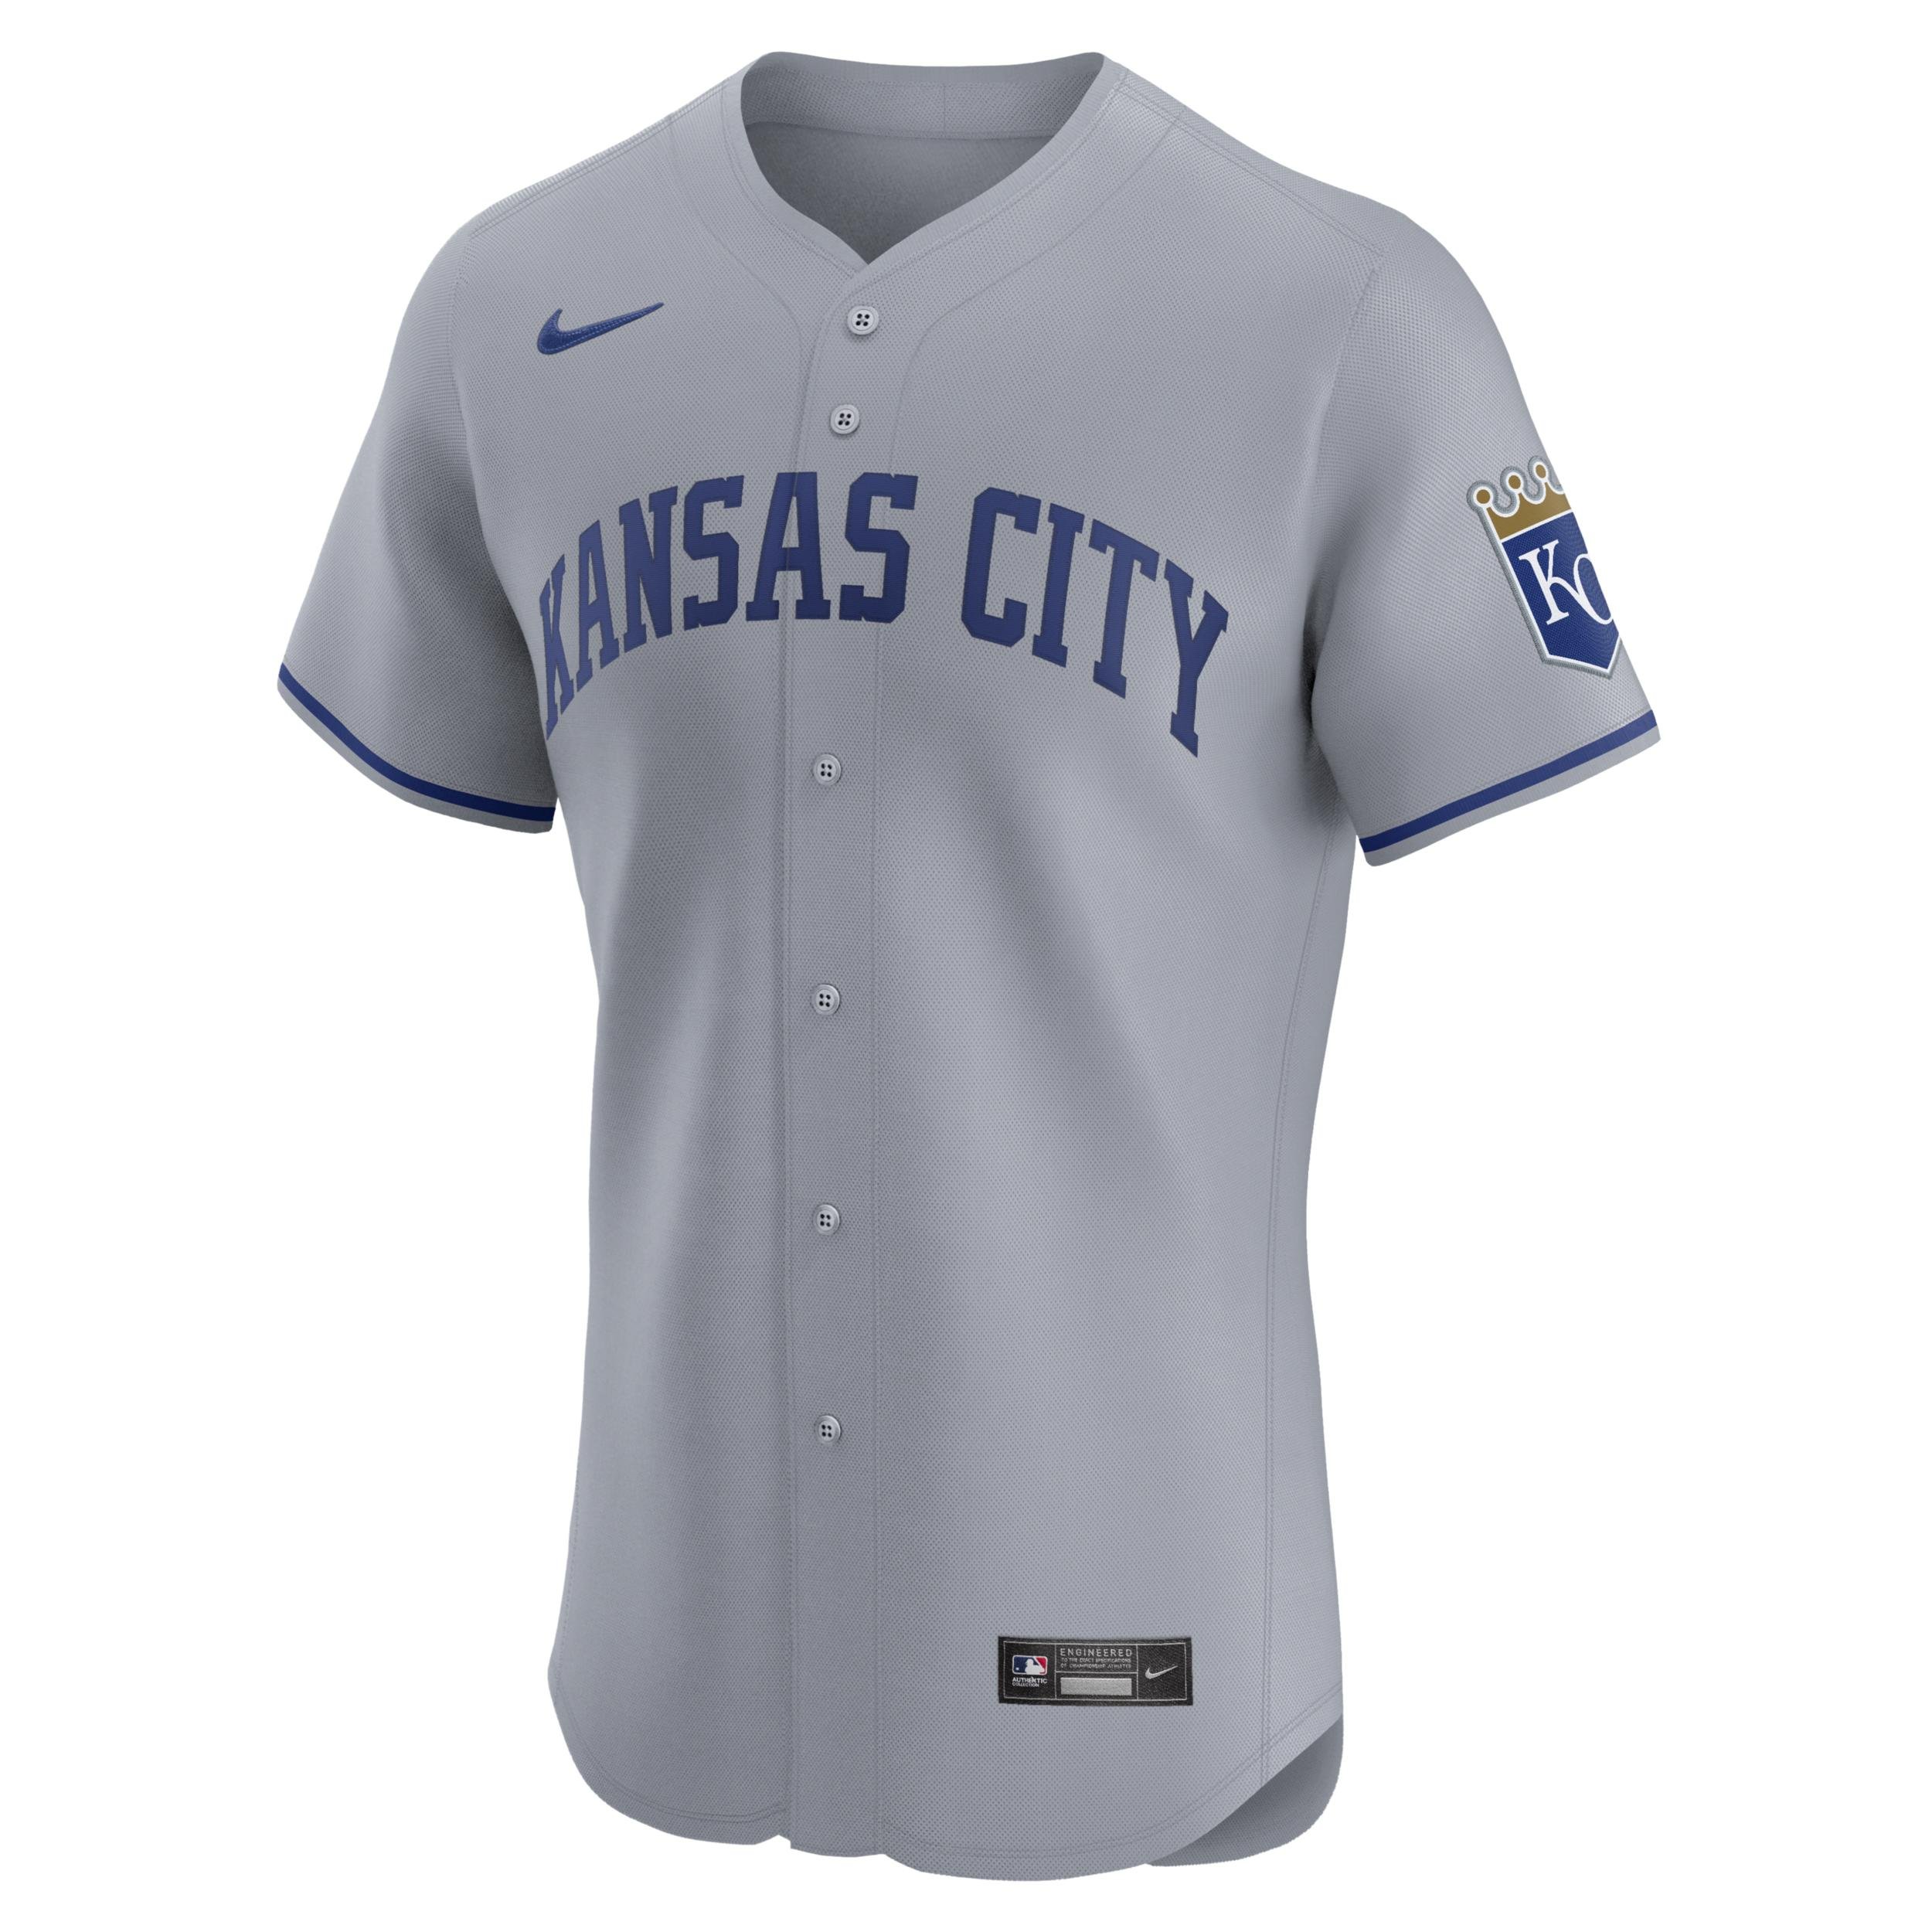 Kansas City Royals Nike Men's Dri-FIT ADV MLB Elite Jersey by NIKE